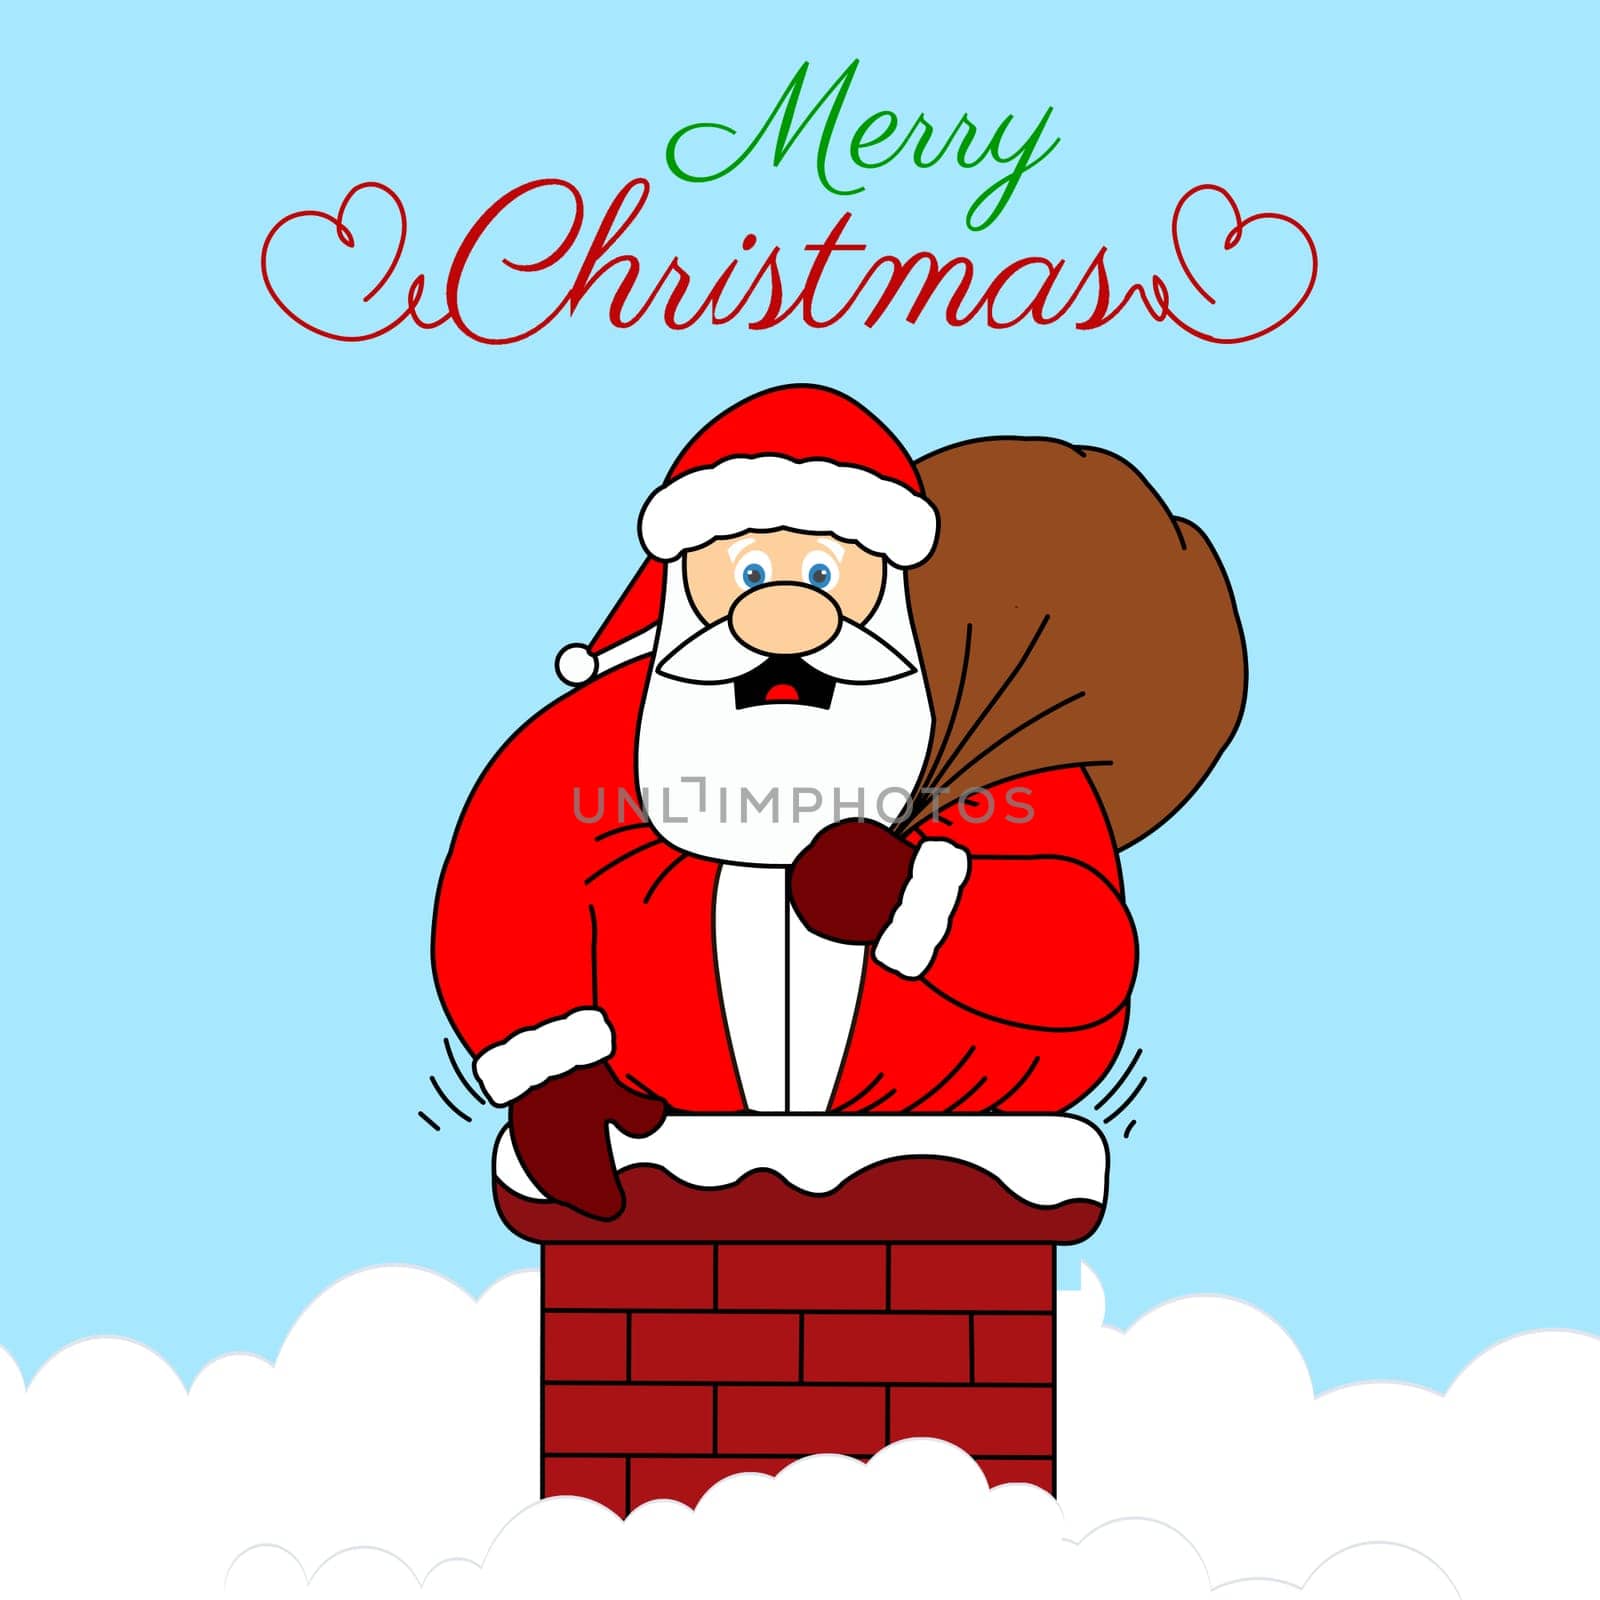 Merry Christmas Fat Santa by Bigalbaloo